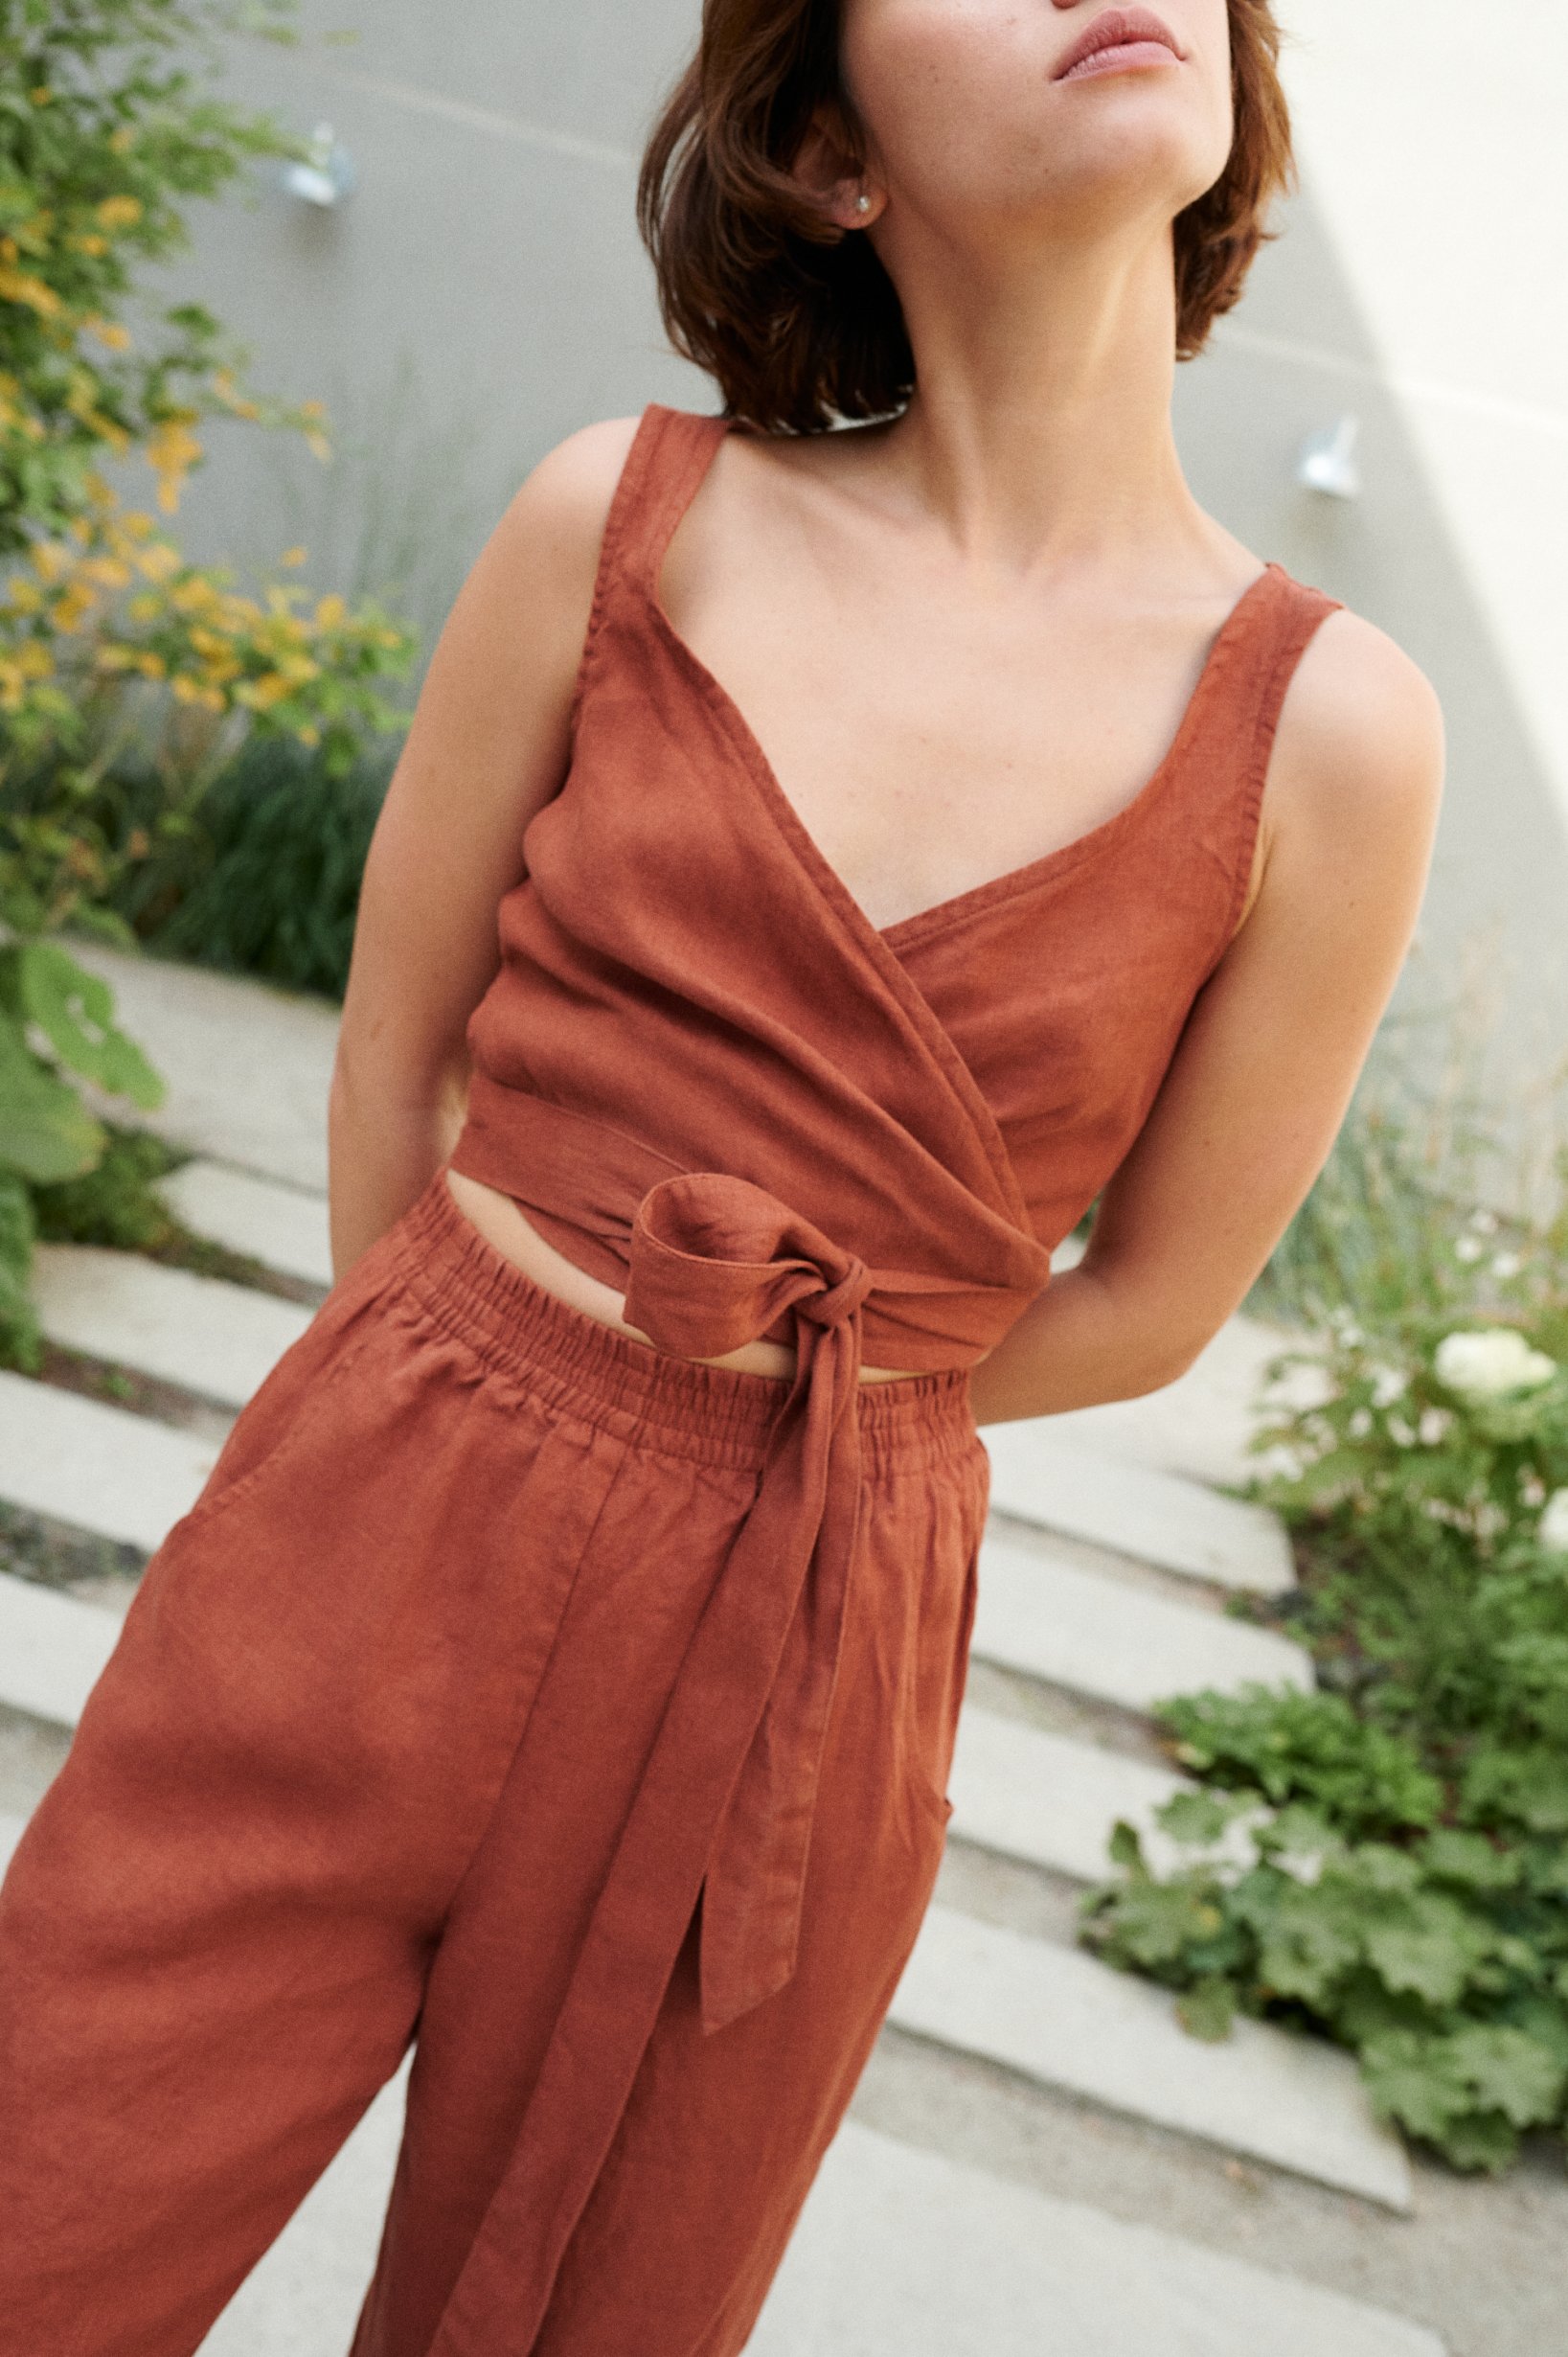 French model wearing wrap linen top in terracotta color